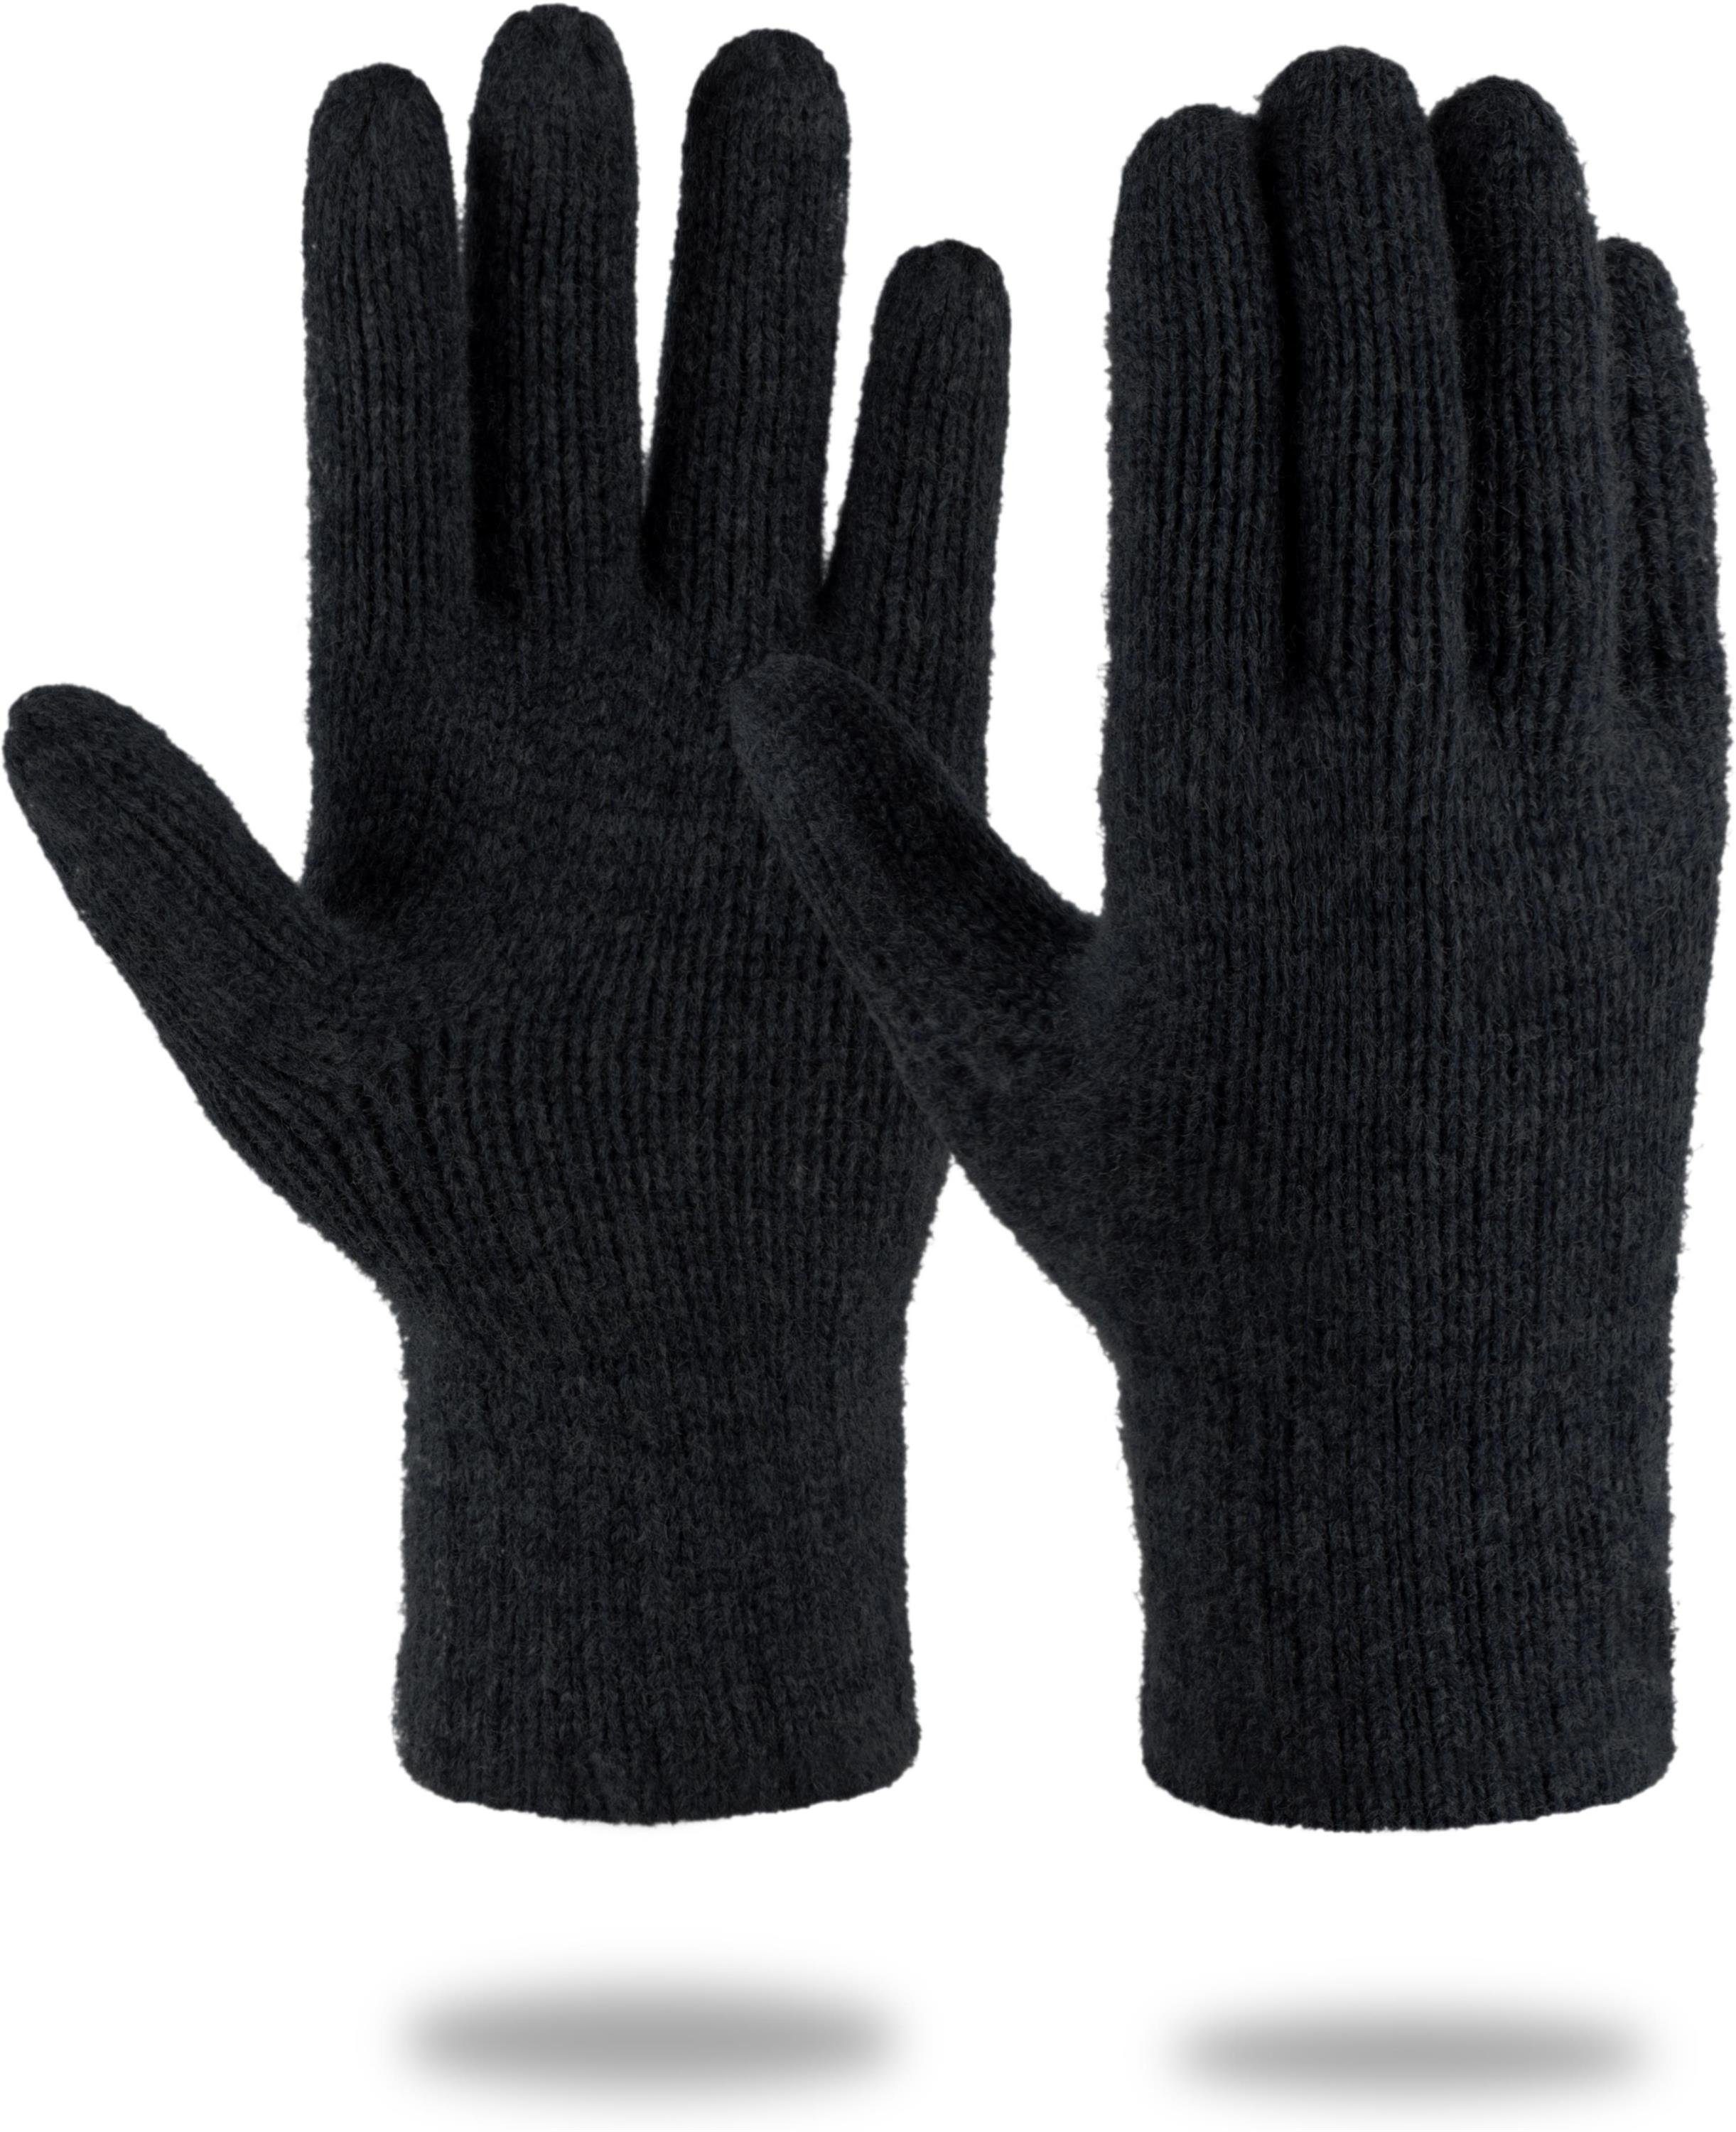 Thermohandschuhe Strick-Fingerhandschuhe normani Herren Onslow Damen für Winterhandschuhe Strickhandschuhe Merino und Merinohandschuhe